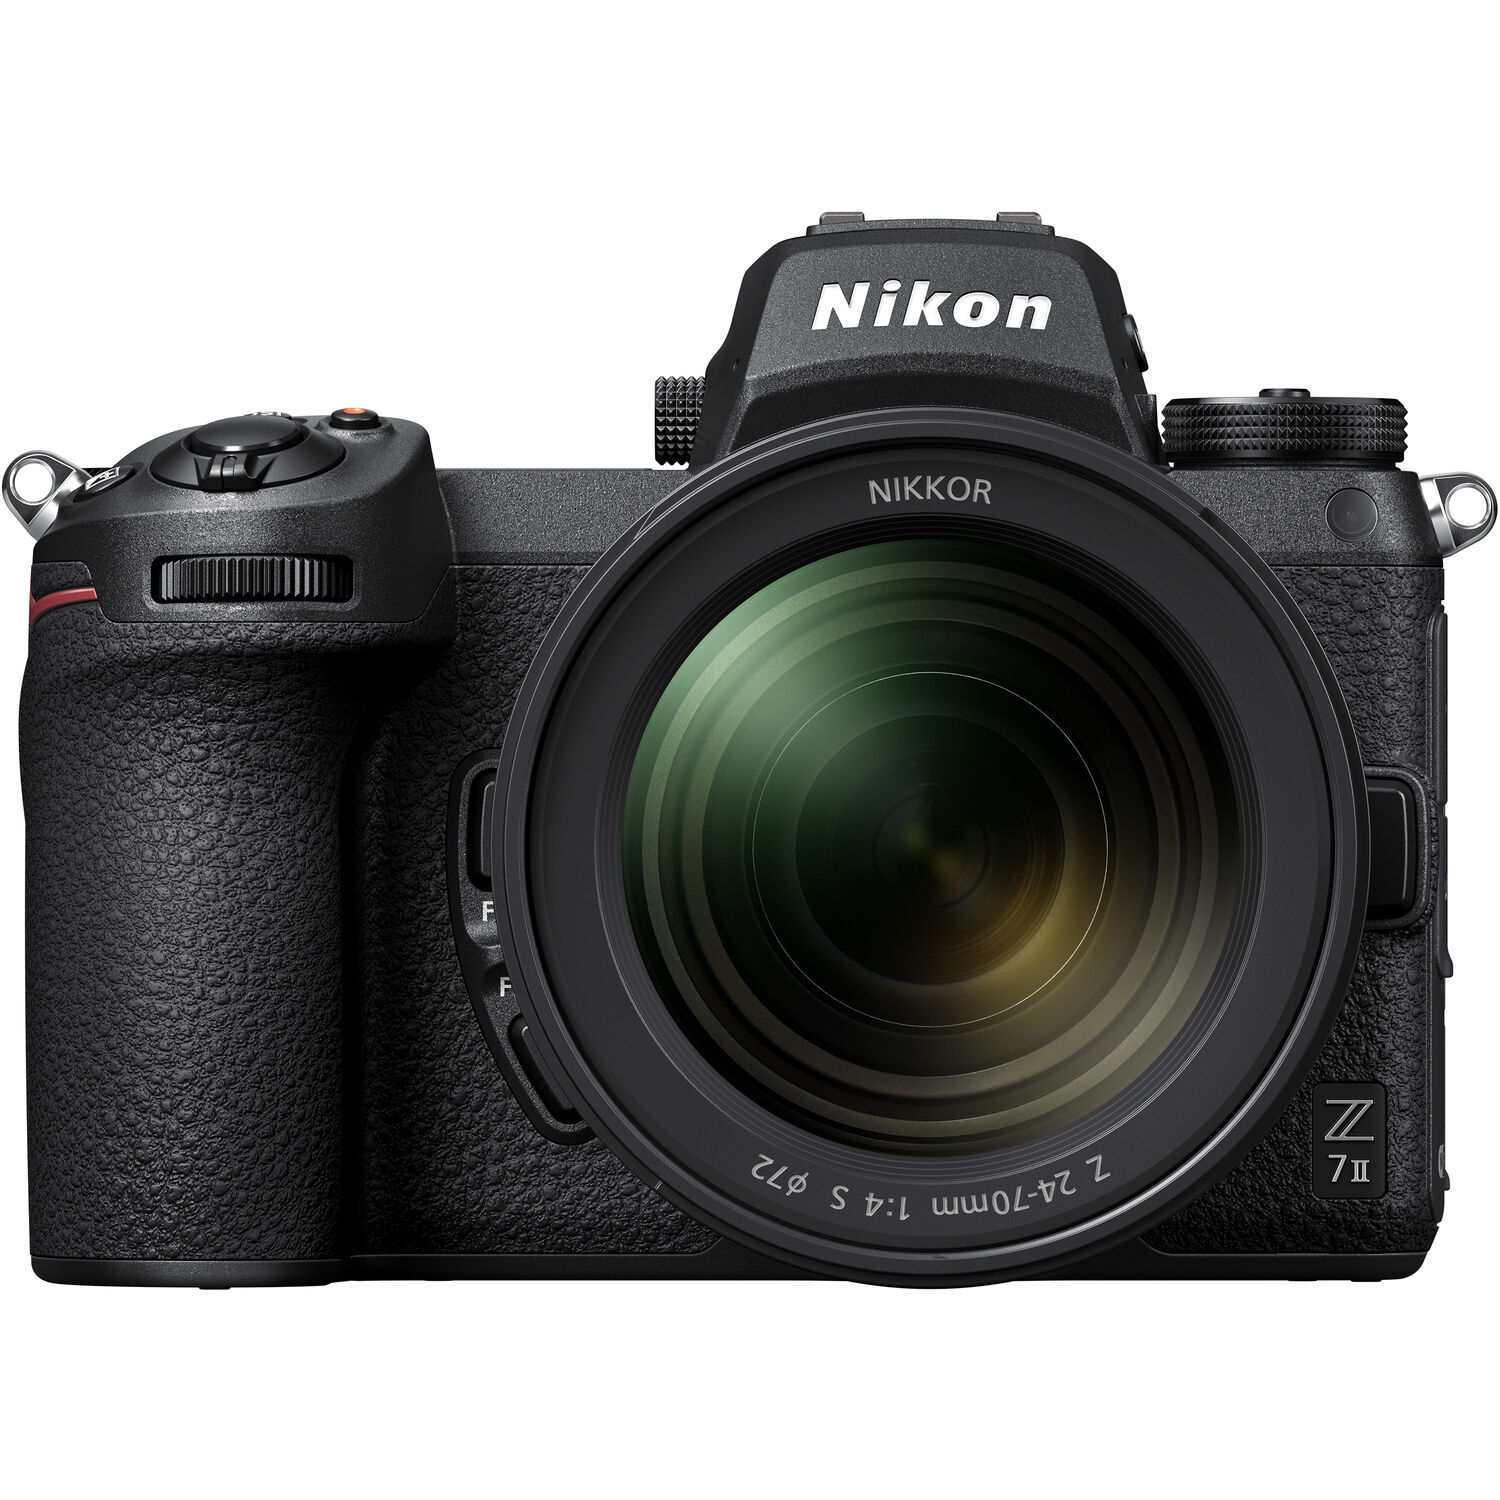 Nikon Z7 II Mirrorless Camera with Z 24-70mm F4 S Lens